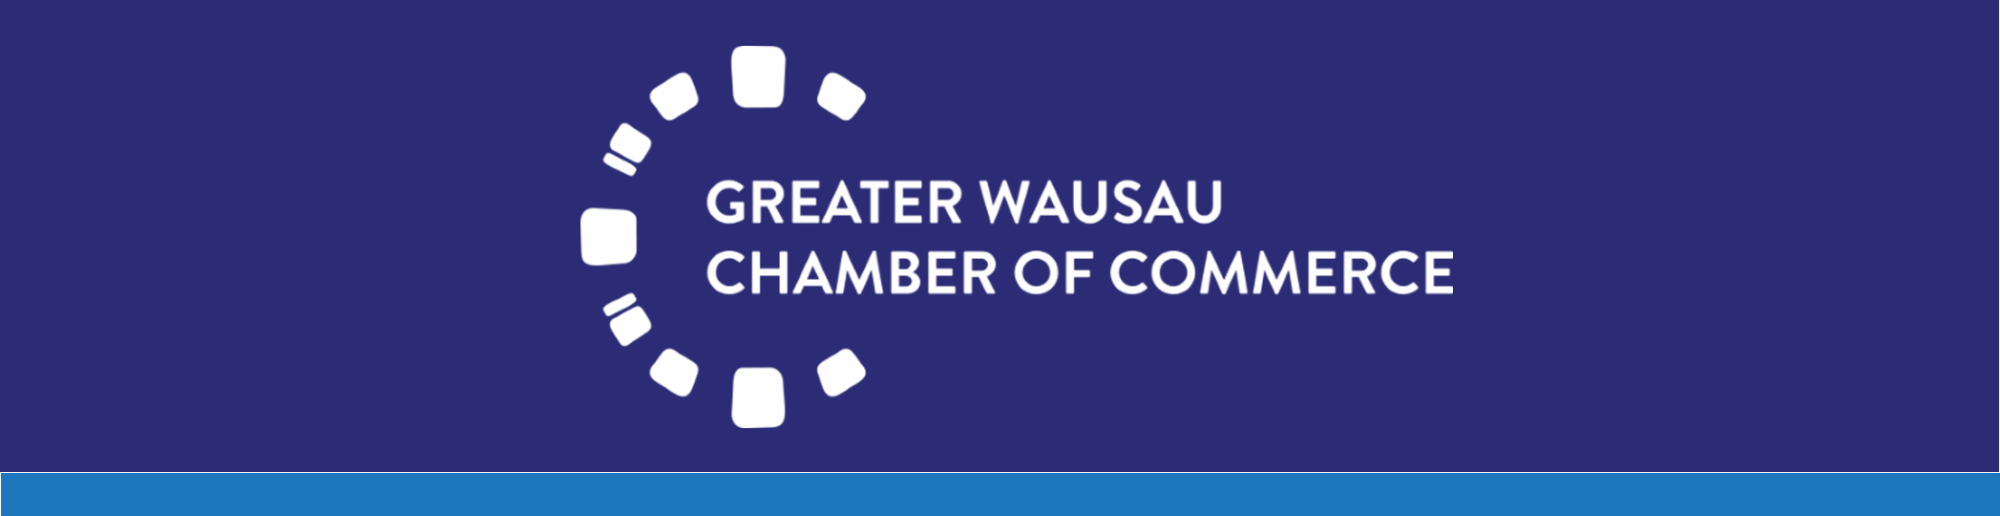 Chamber Printed Community Calendar 2023 Greater Wausau Chamber of